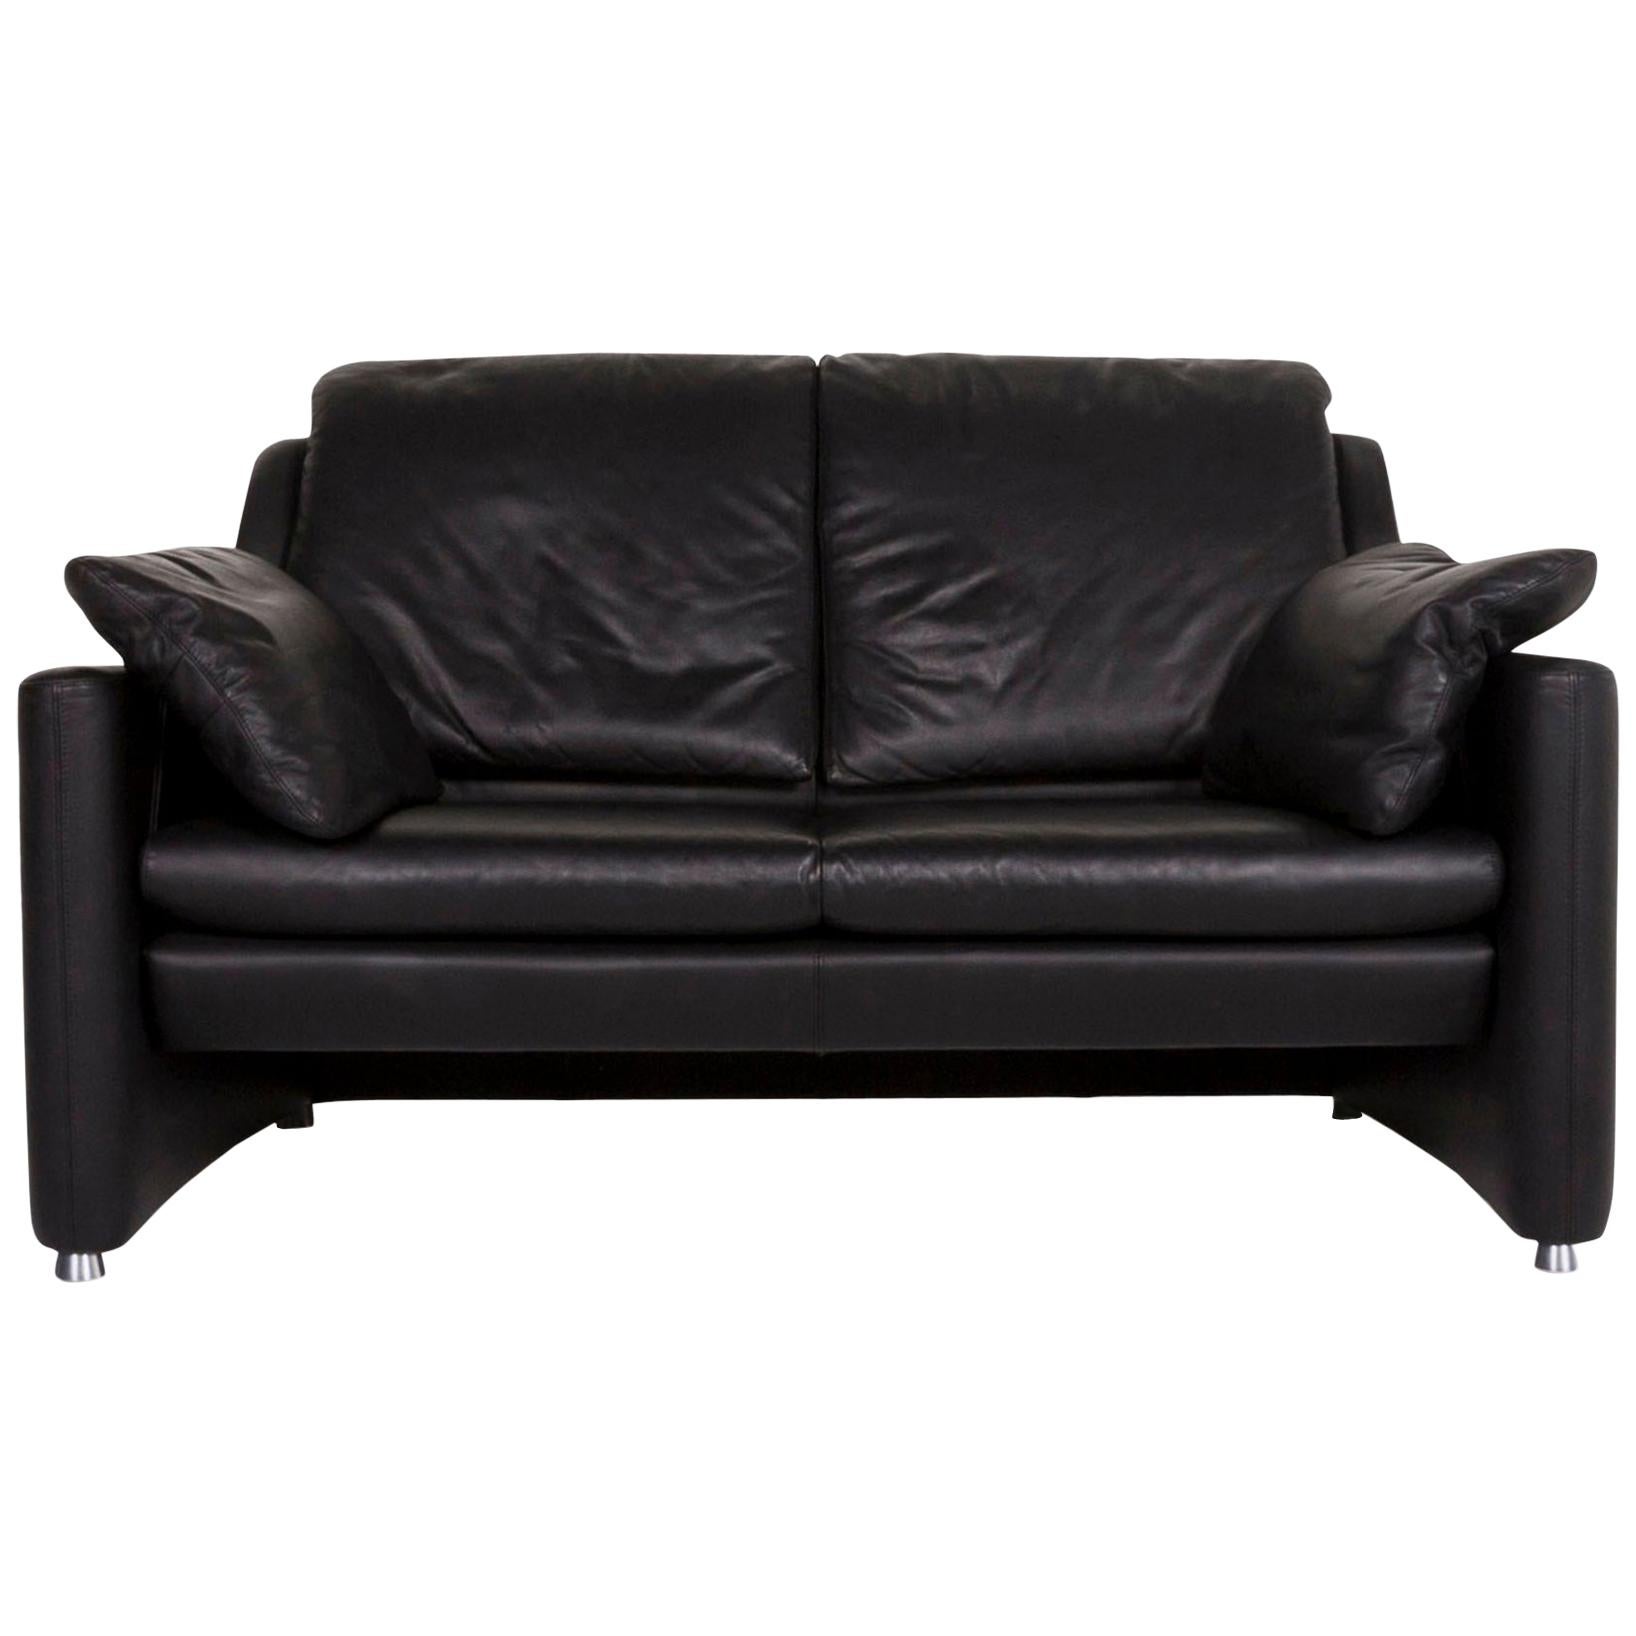 Leolux Fidamigo Leather Sofa Black Two-Seat Couch For Sale